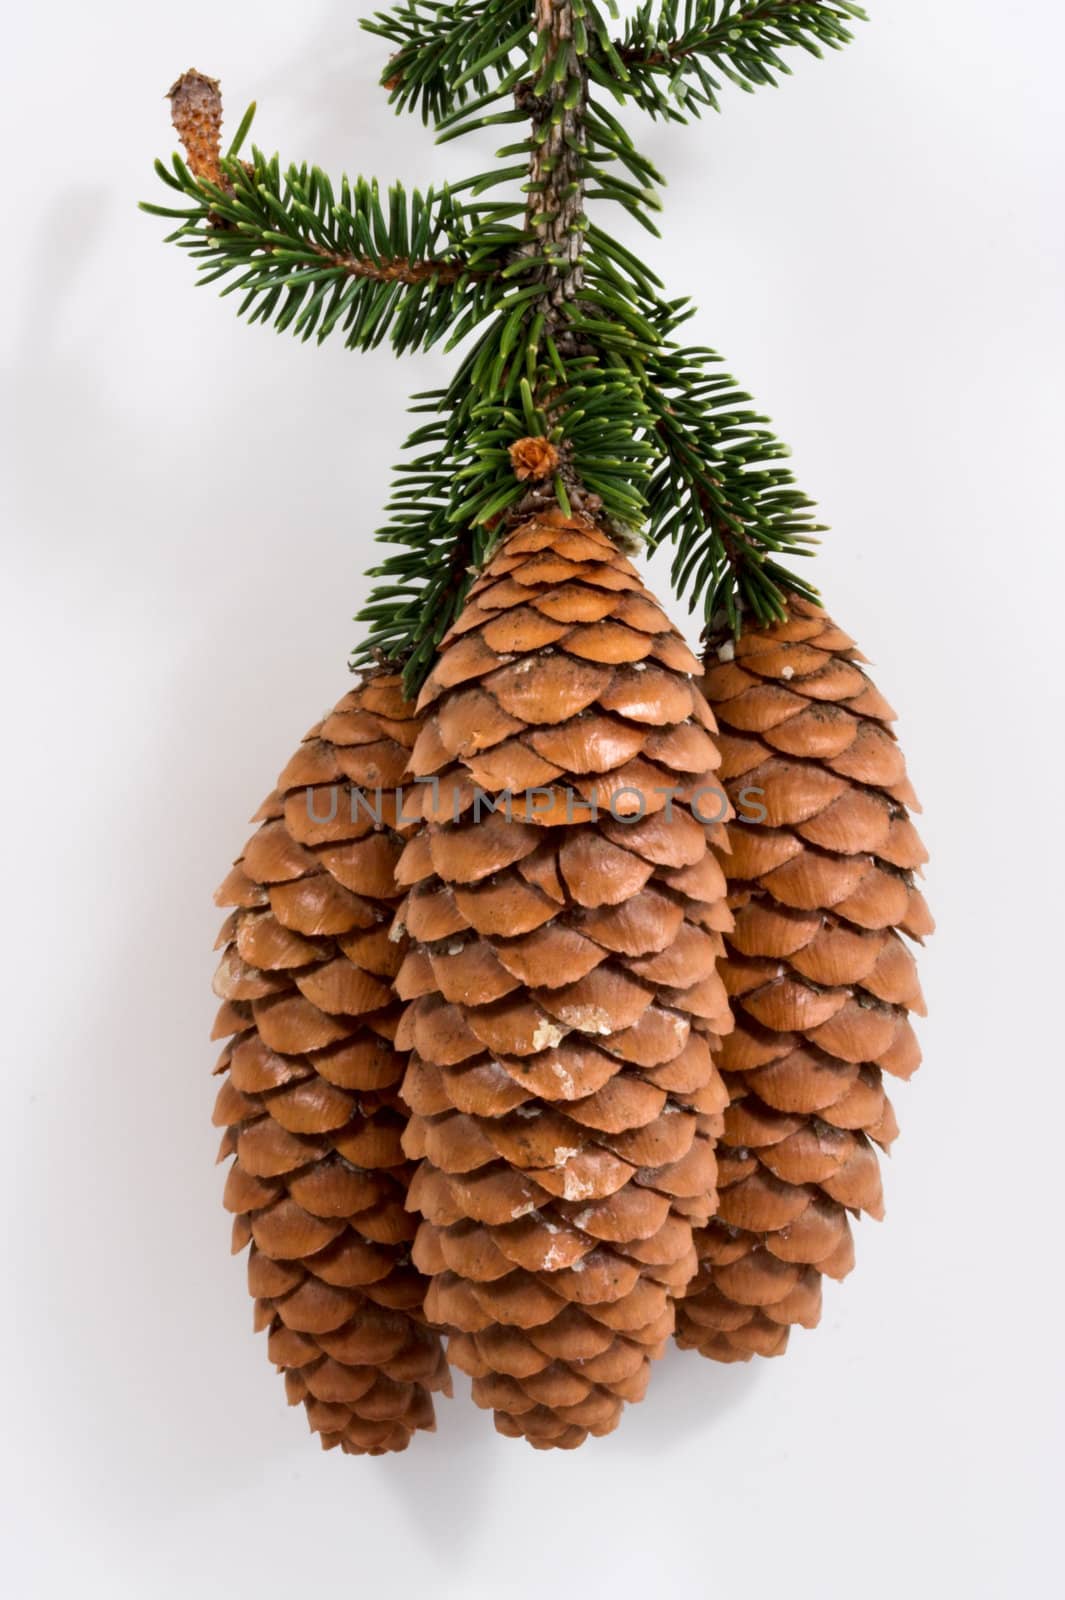 Pine Cones by sbonk